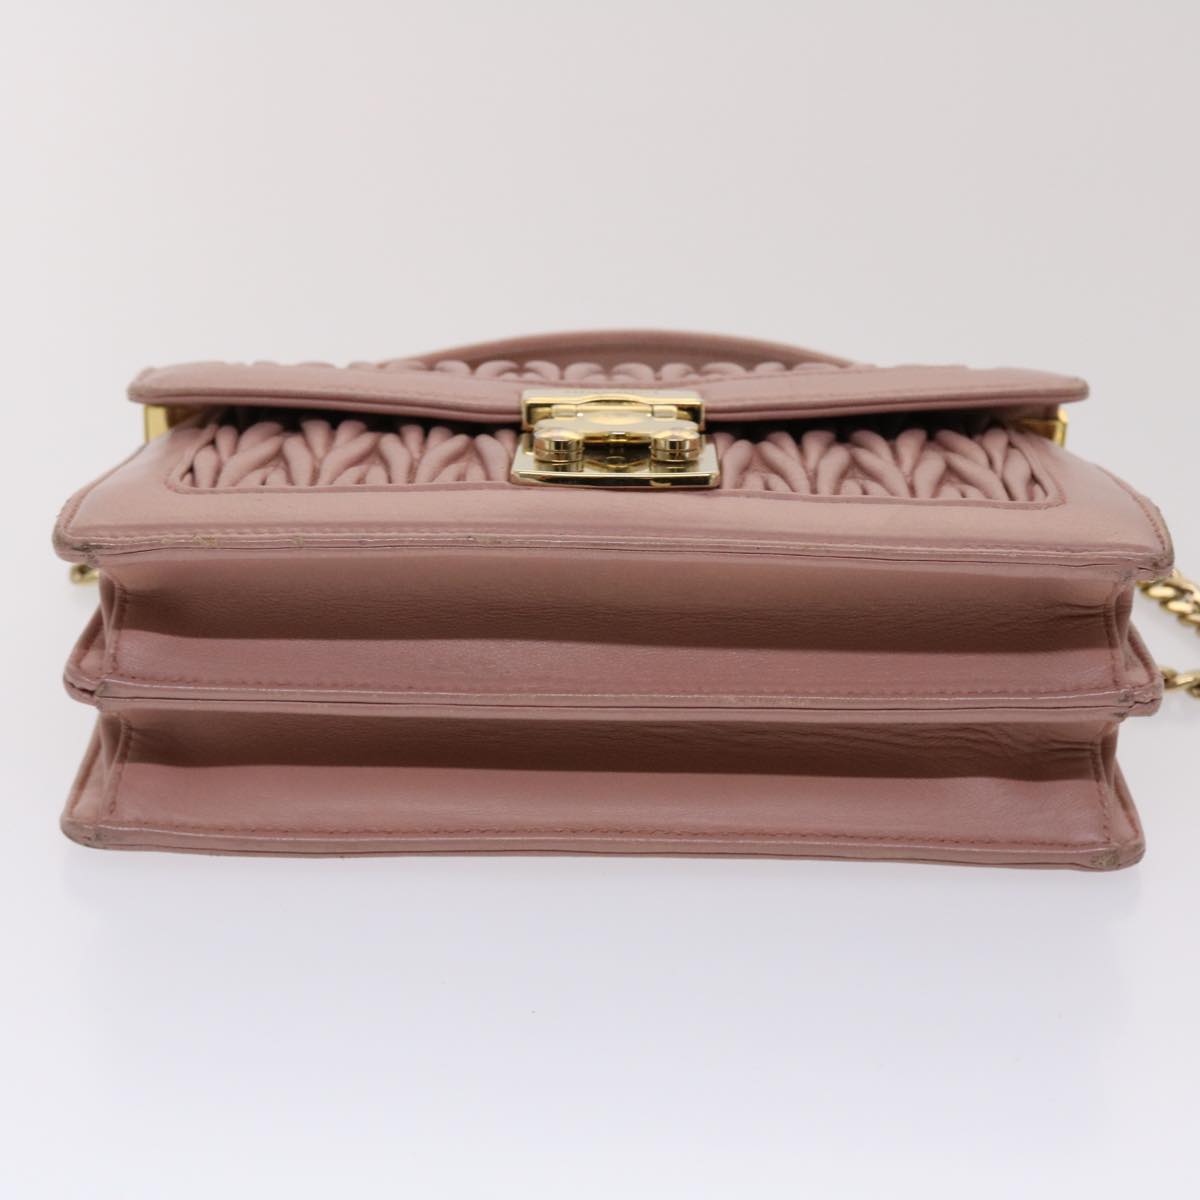 Miu Miu Materasse Chain Confidential Shoulder Bag Leather Pink Auth bs6358